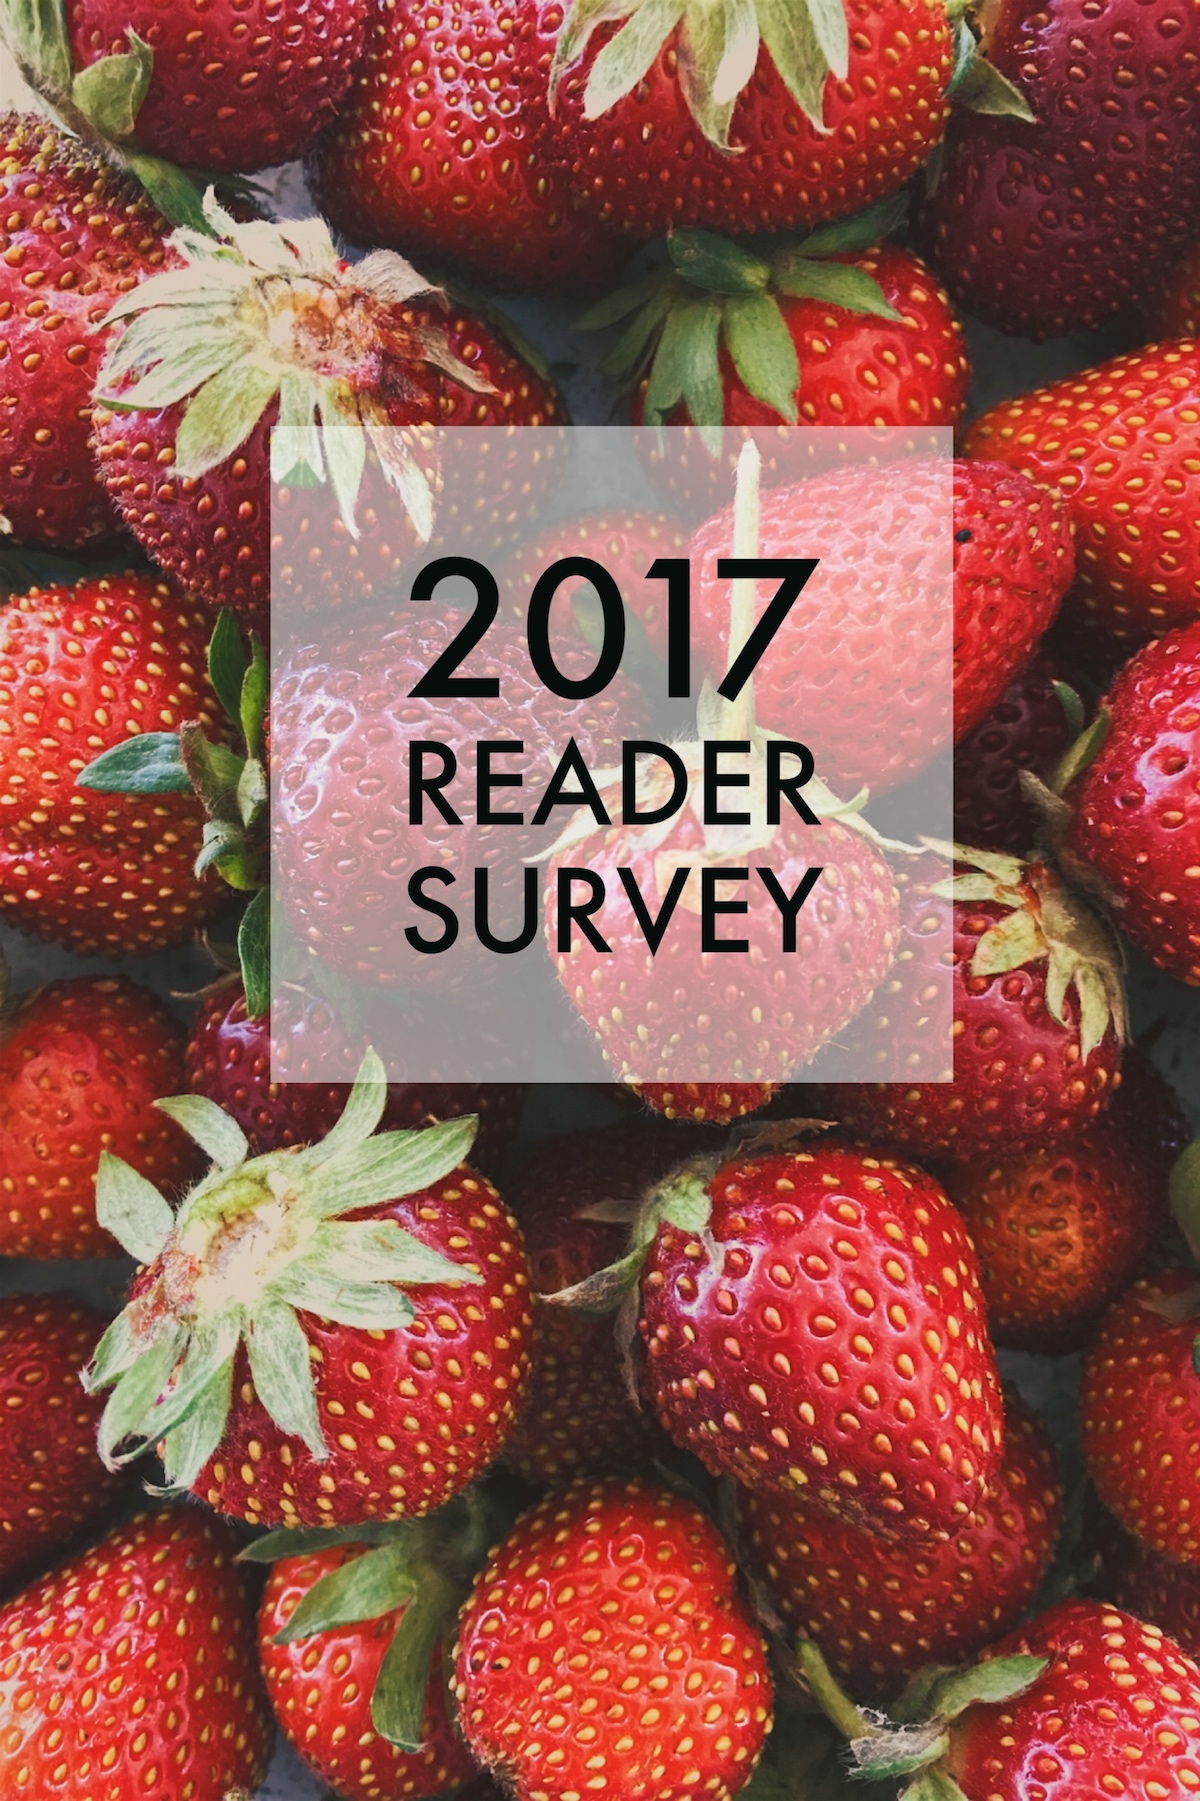 2017 Reader Survey - A Beautiful Plate